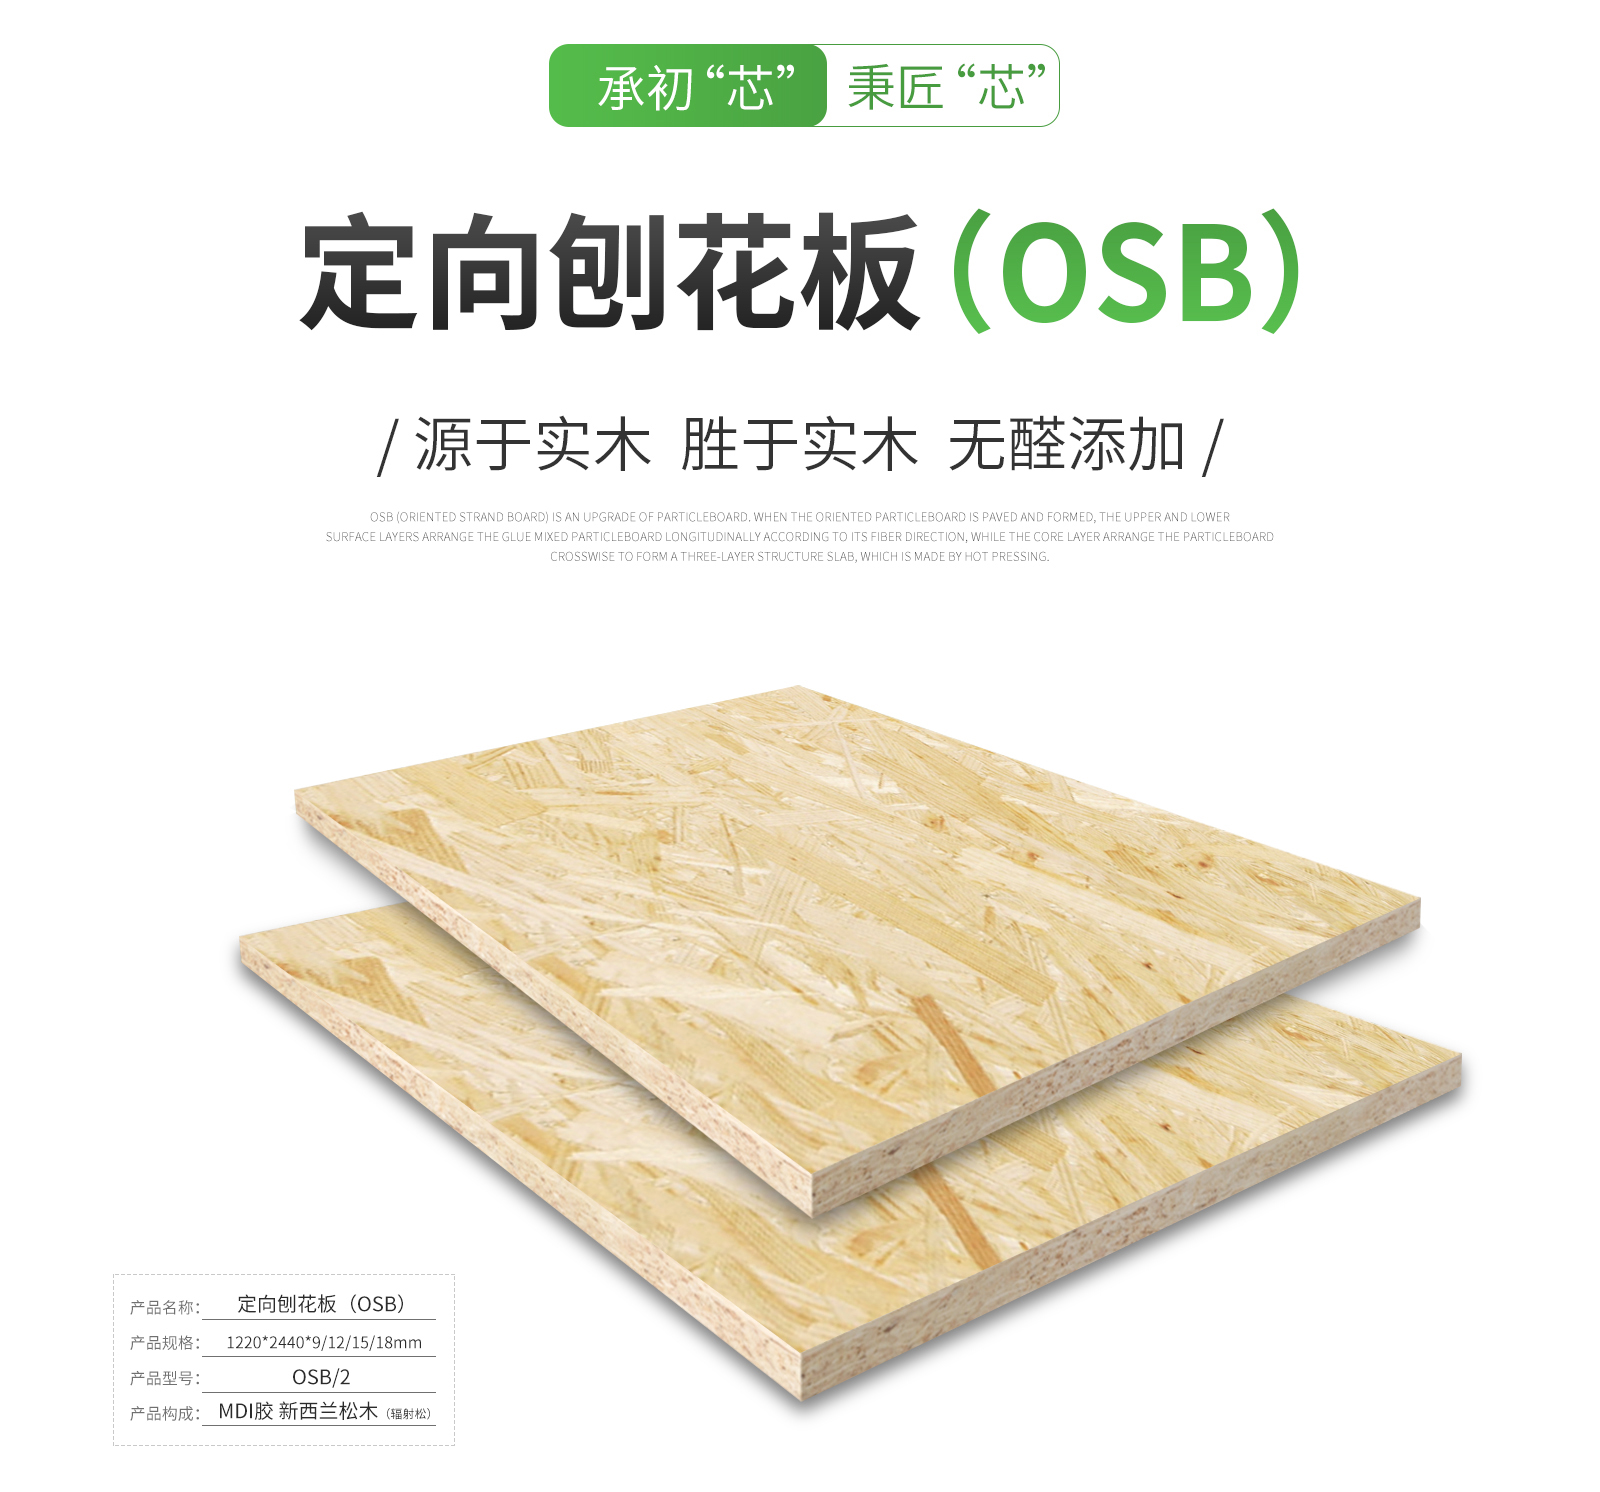 osb板,osb板厂家,osb,osb厂家,osb板材厂家,板材,片状实木结构